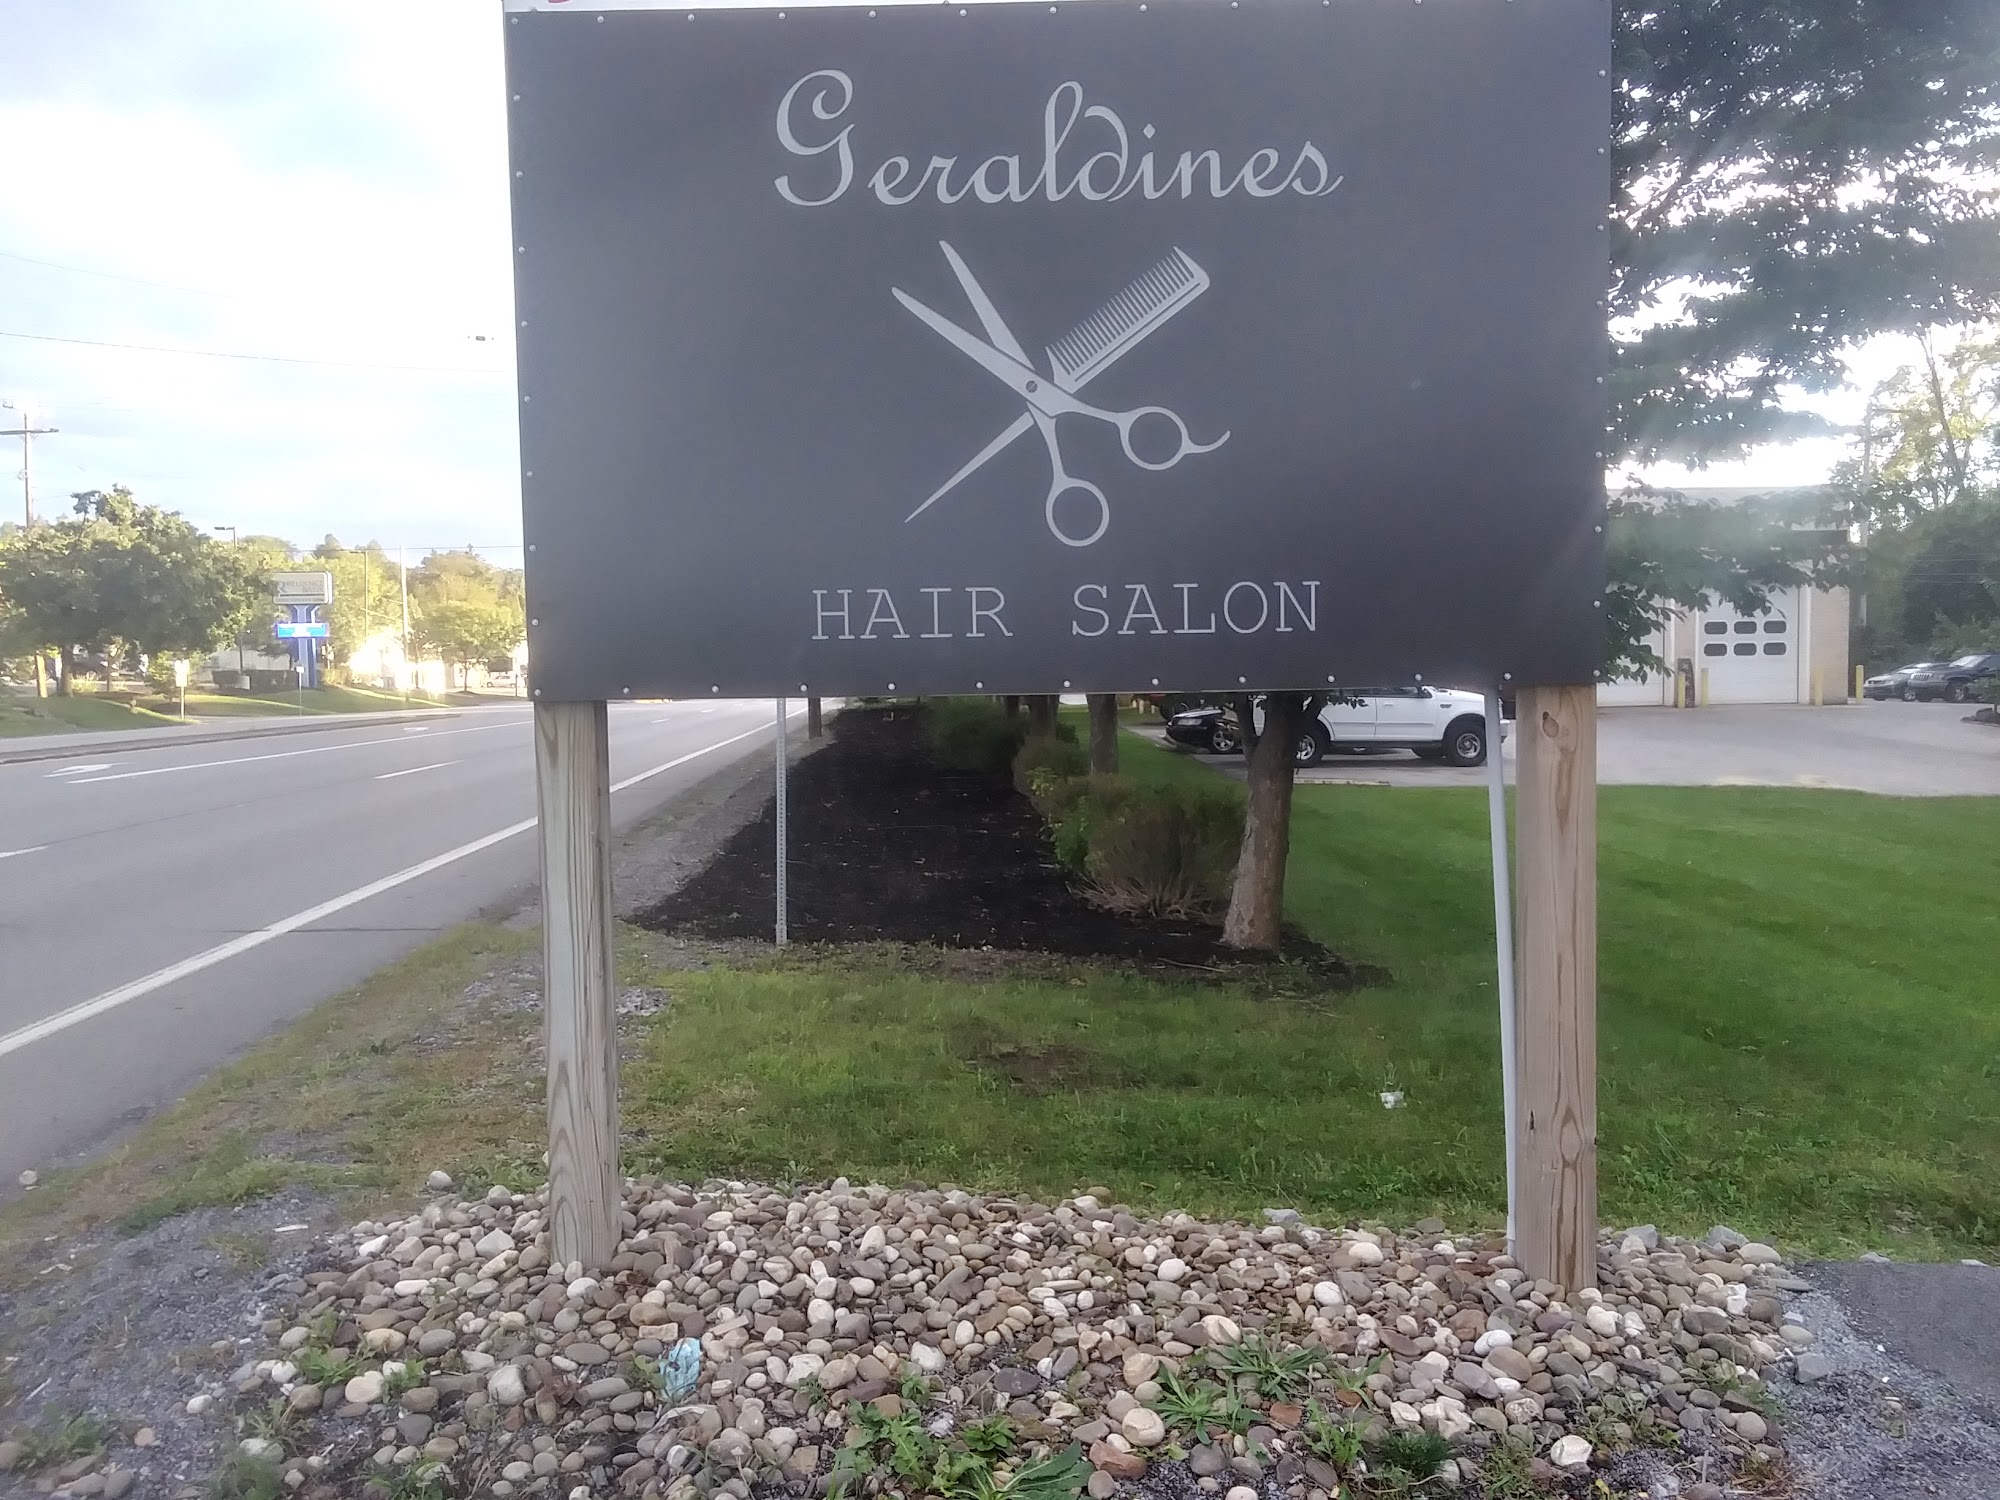 Geraldine's Hair Salon